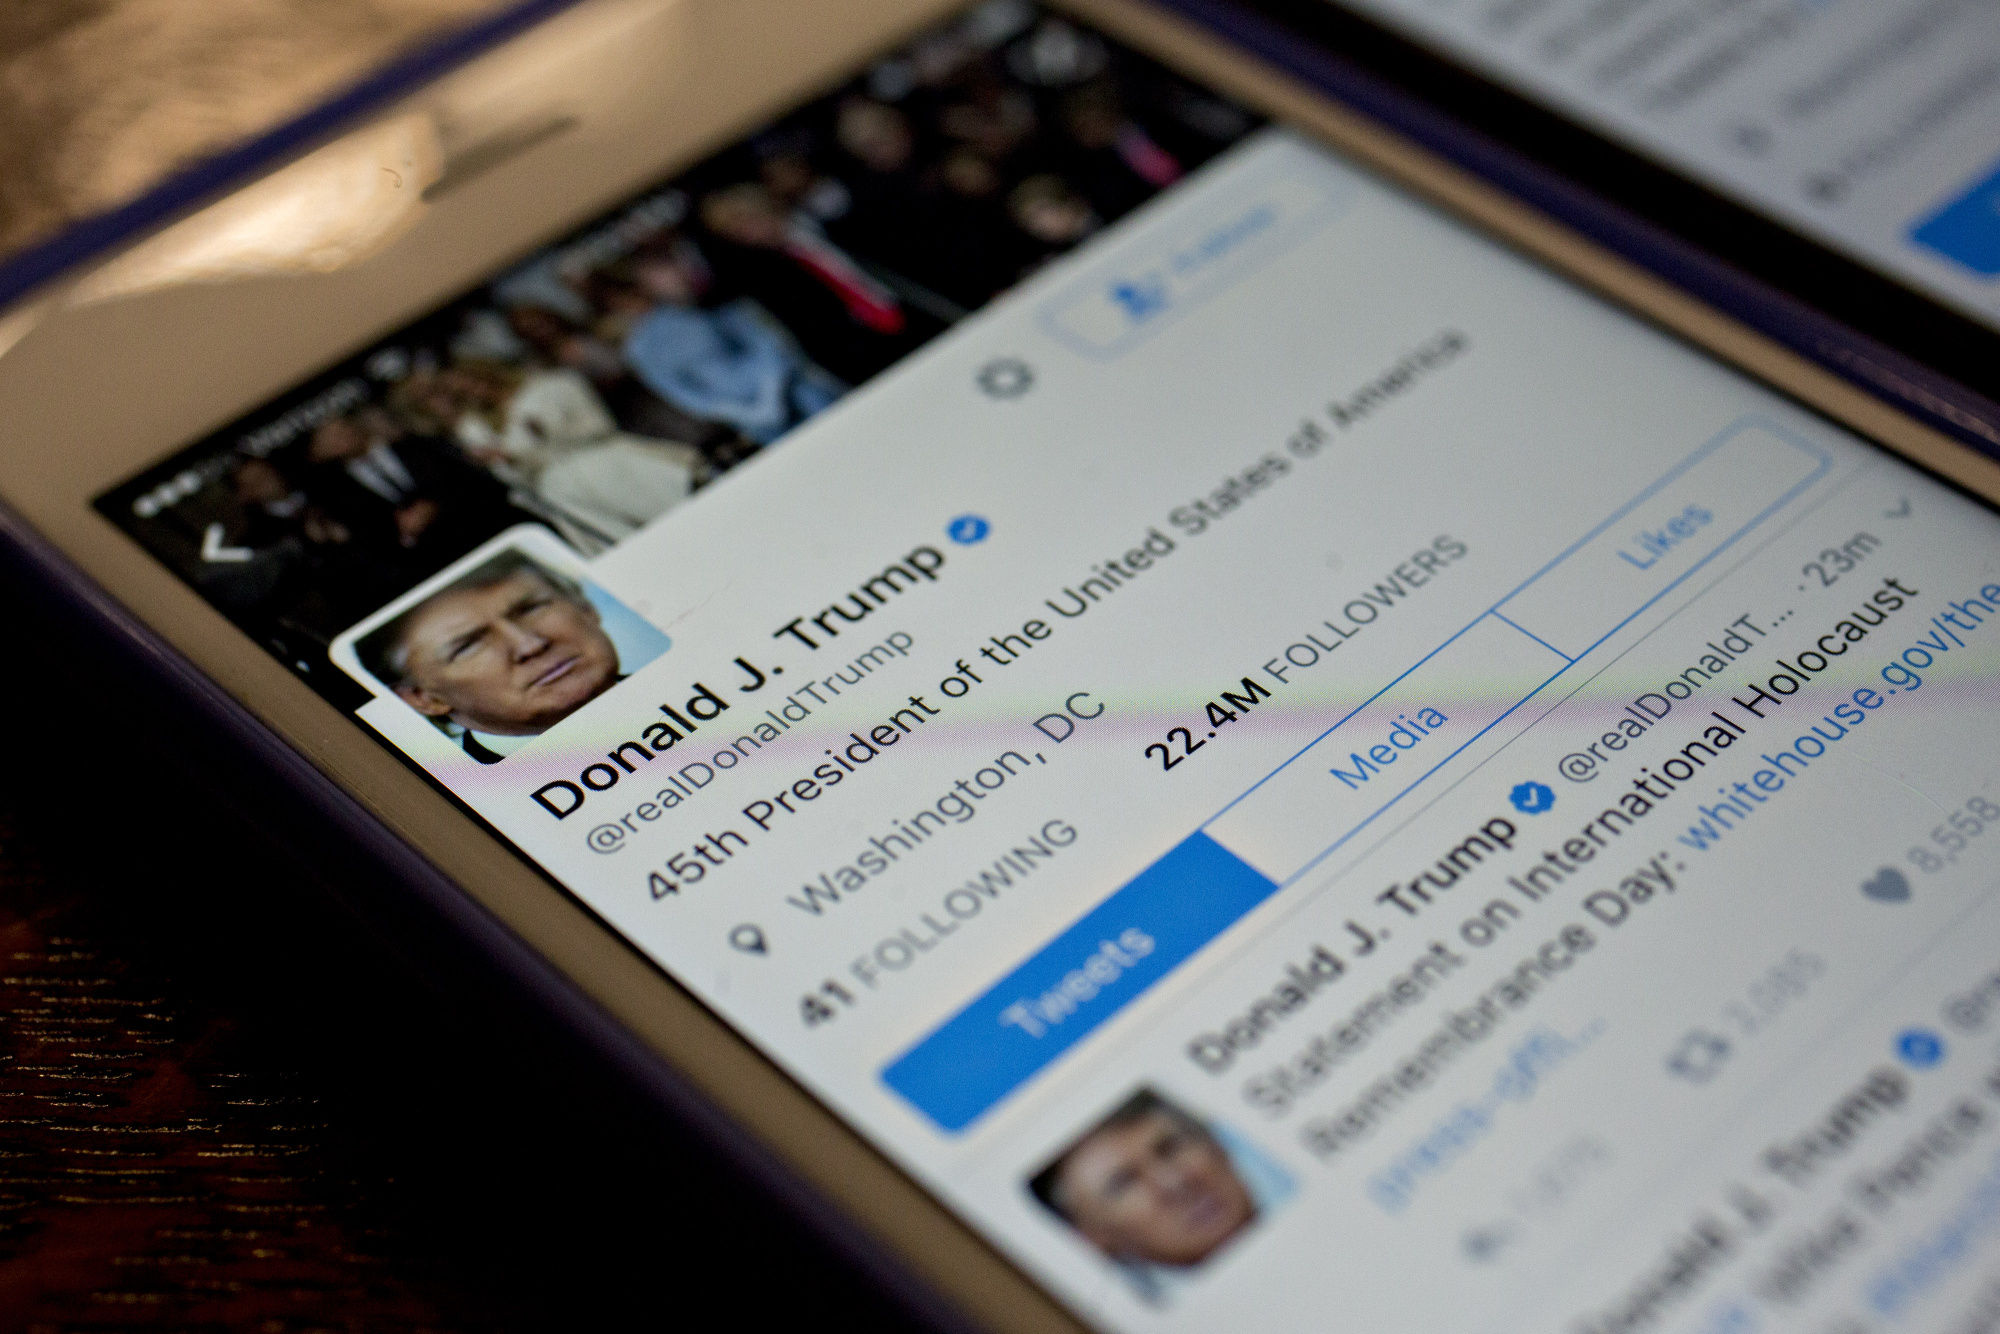 Trump's Twitter Searched Via DOJ Warrant